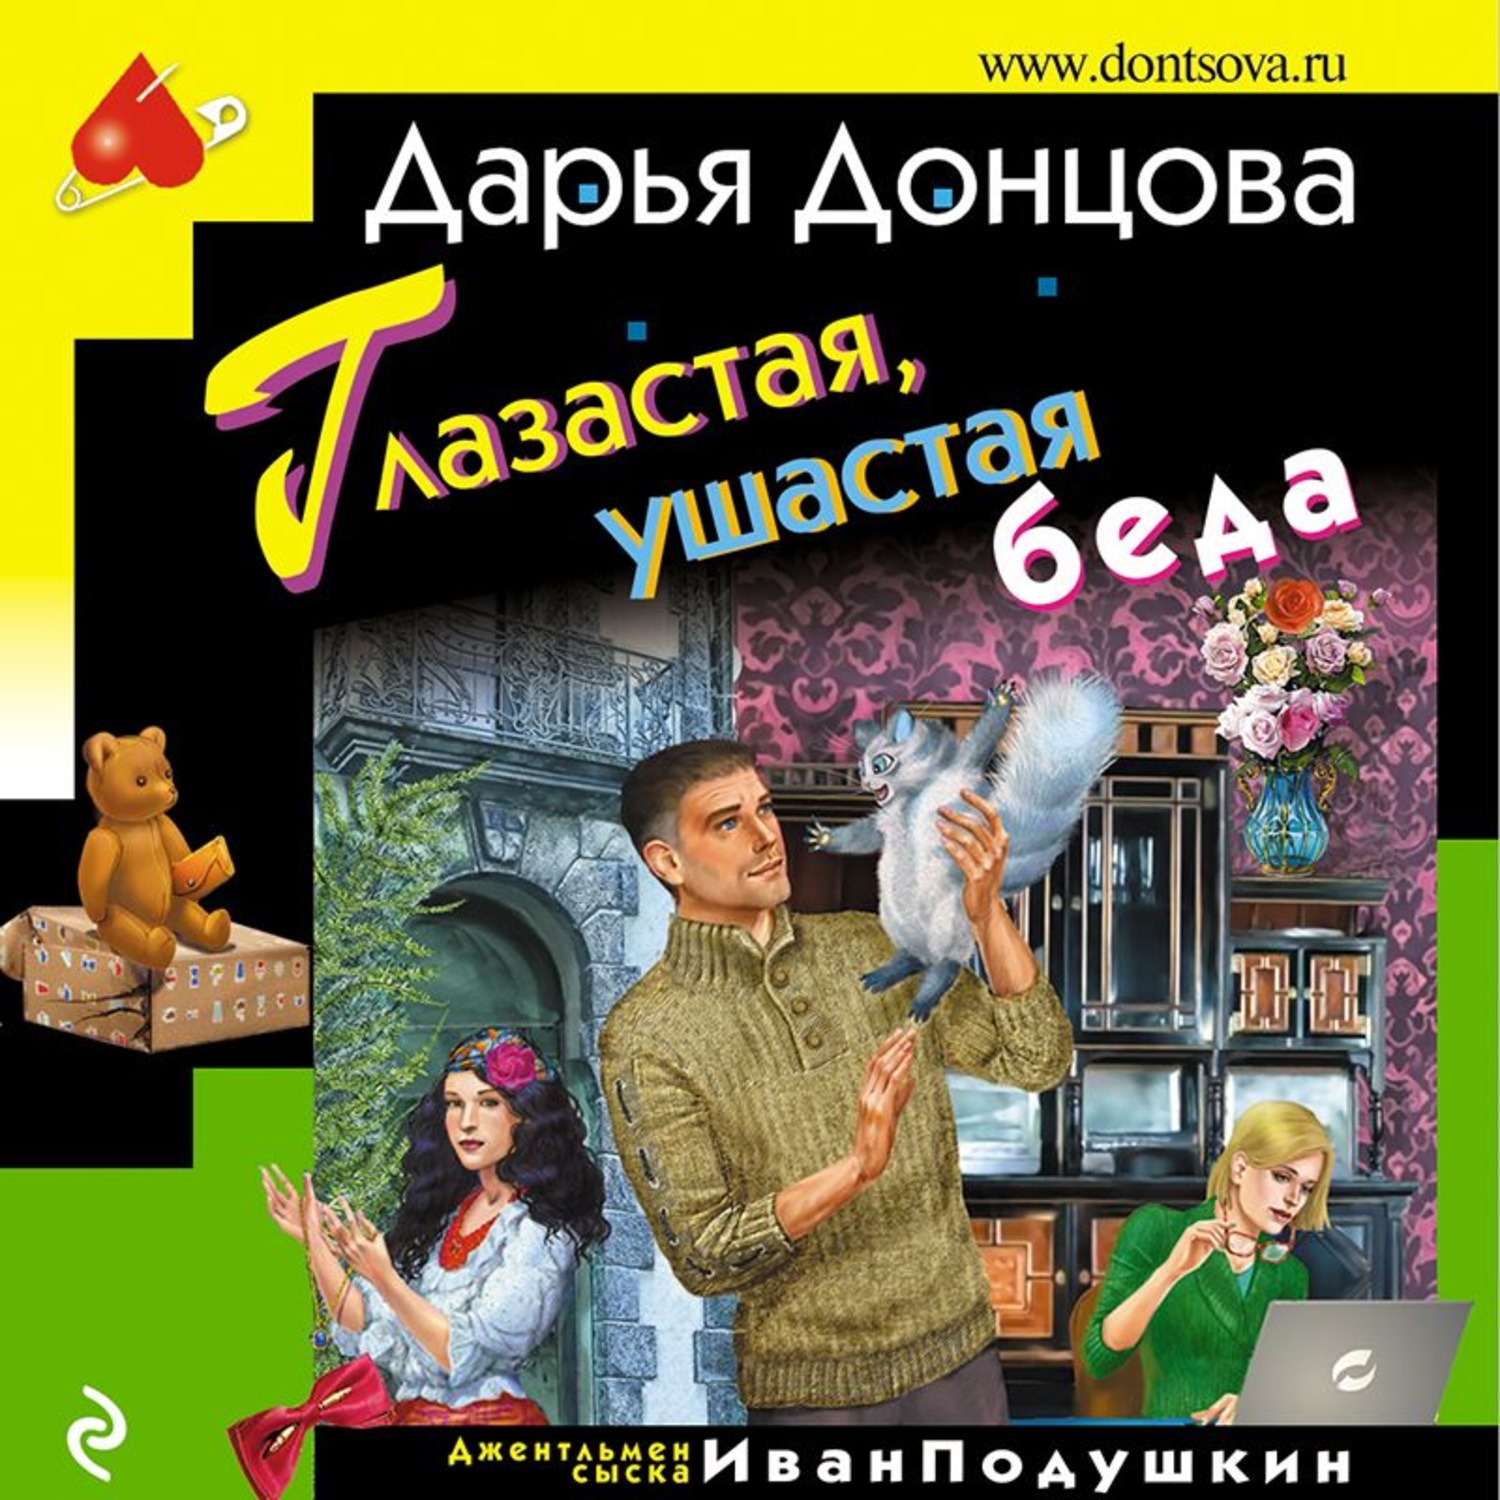 Донцова аудиокниги книга